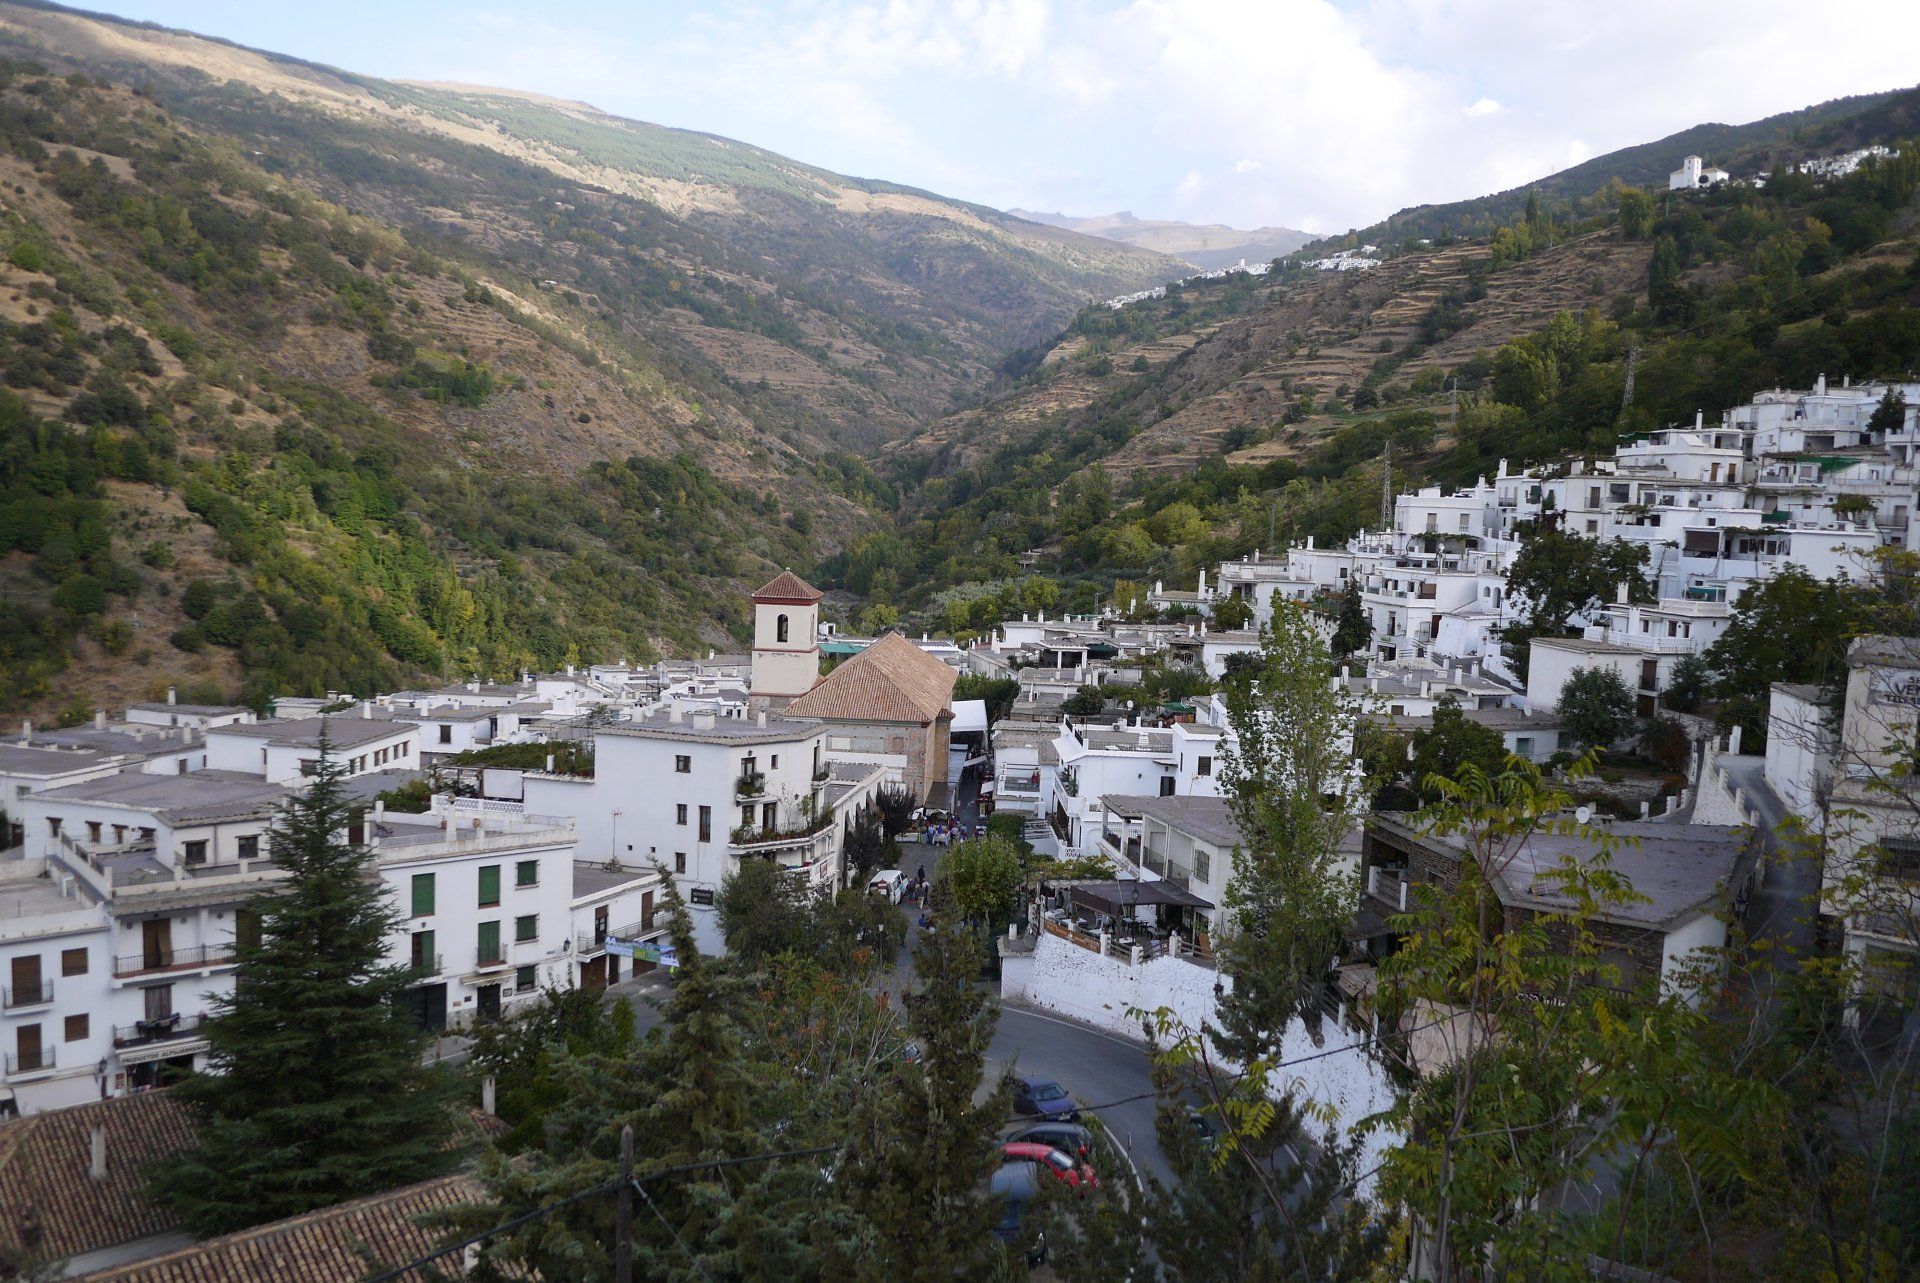 The Village of Pampaneira